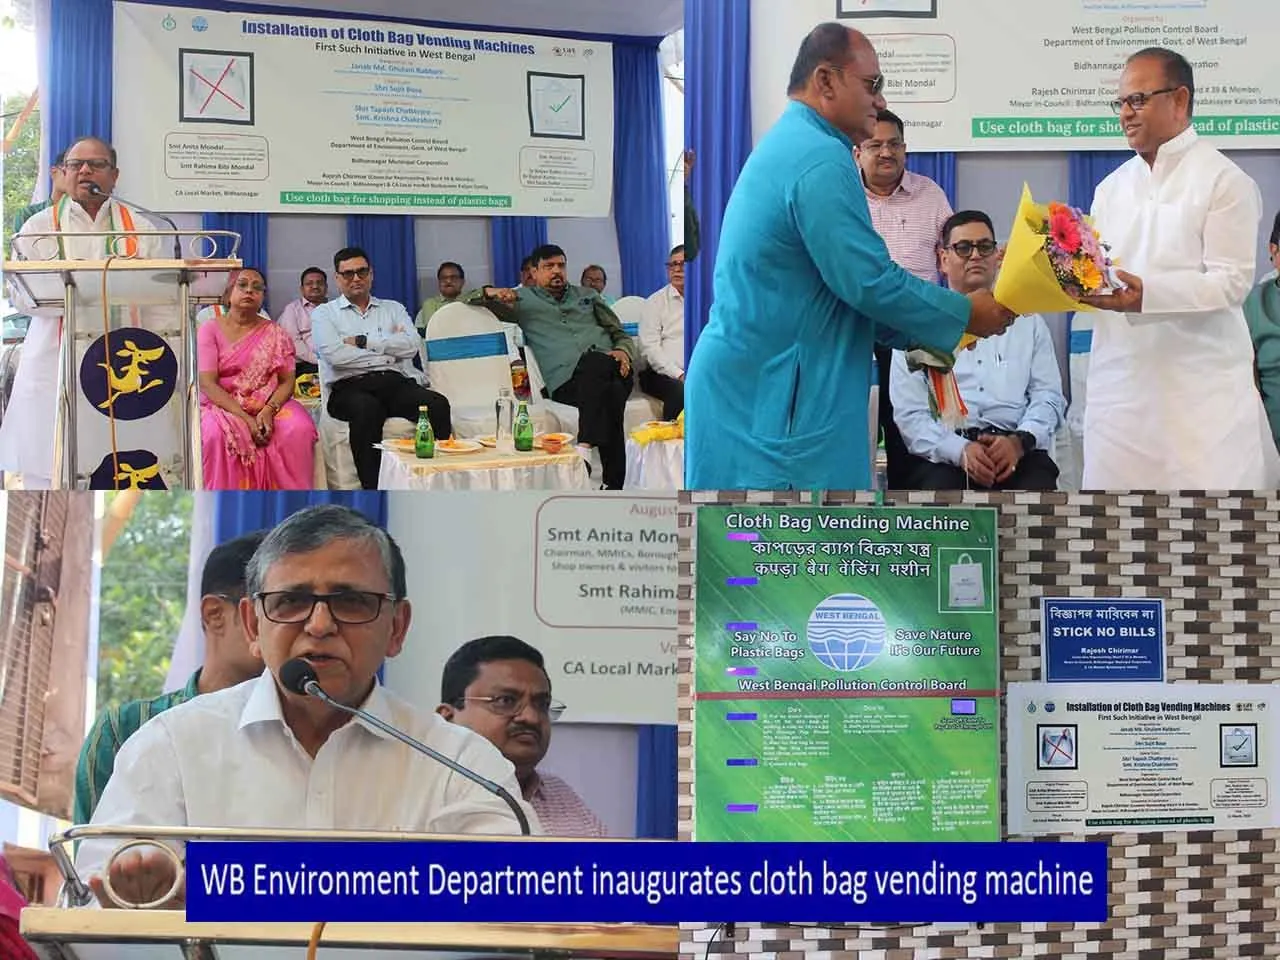 WB Environment Department inaugurates cloth bag vending machine